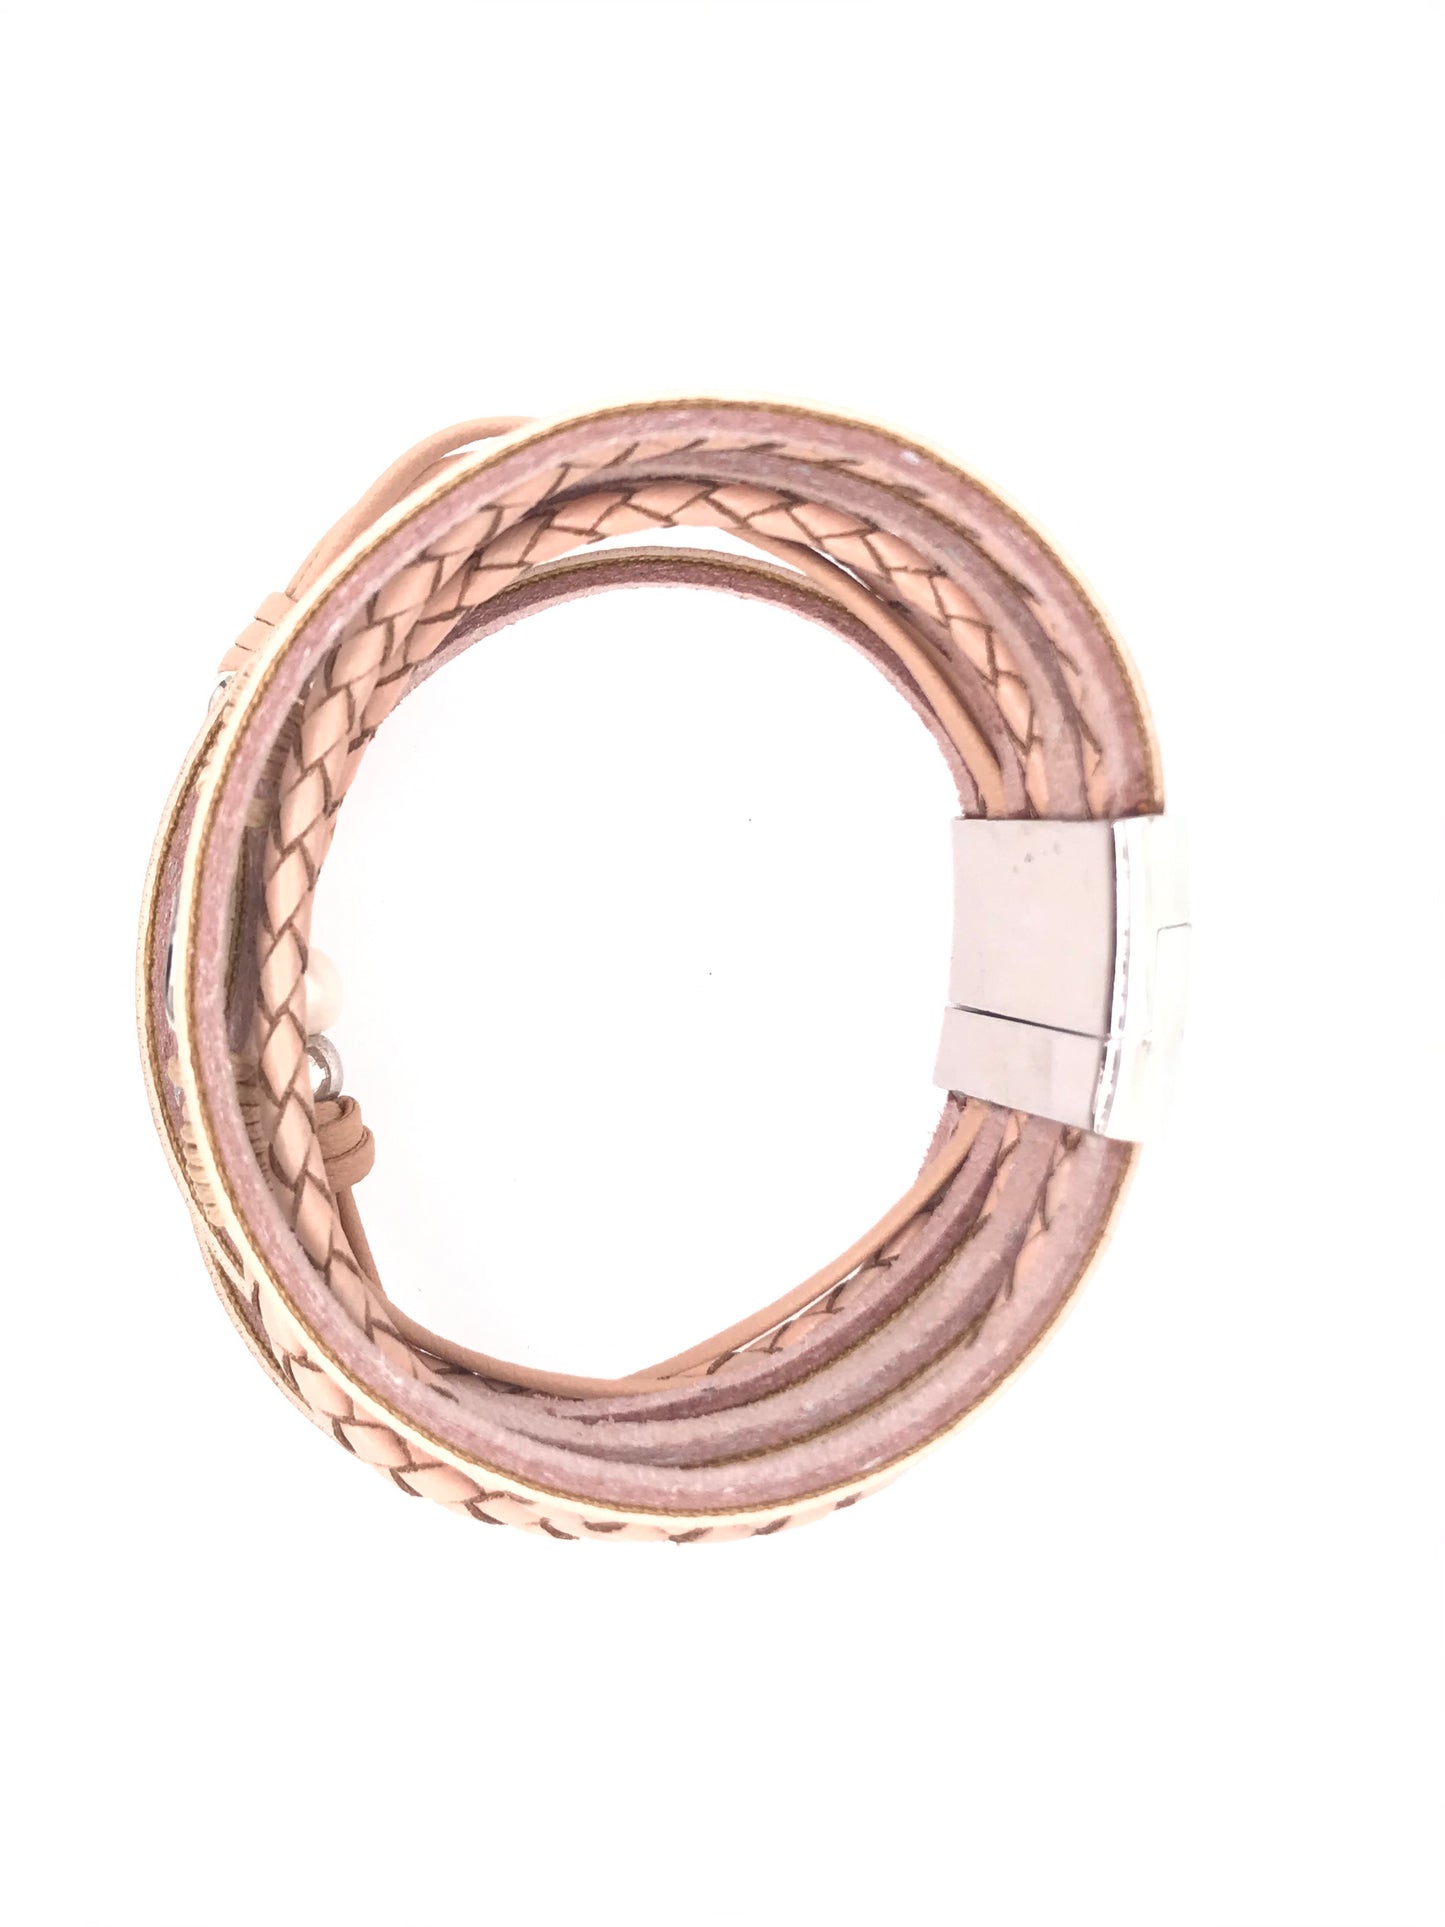 Multi-Layer Leather Magnetic Charm Bangle Bracelet